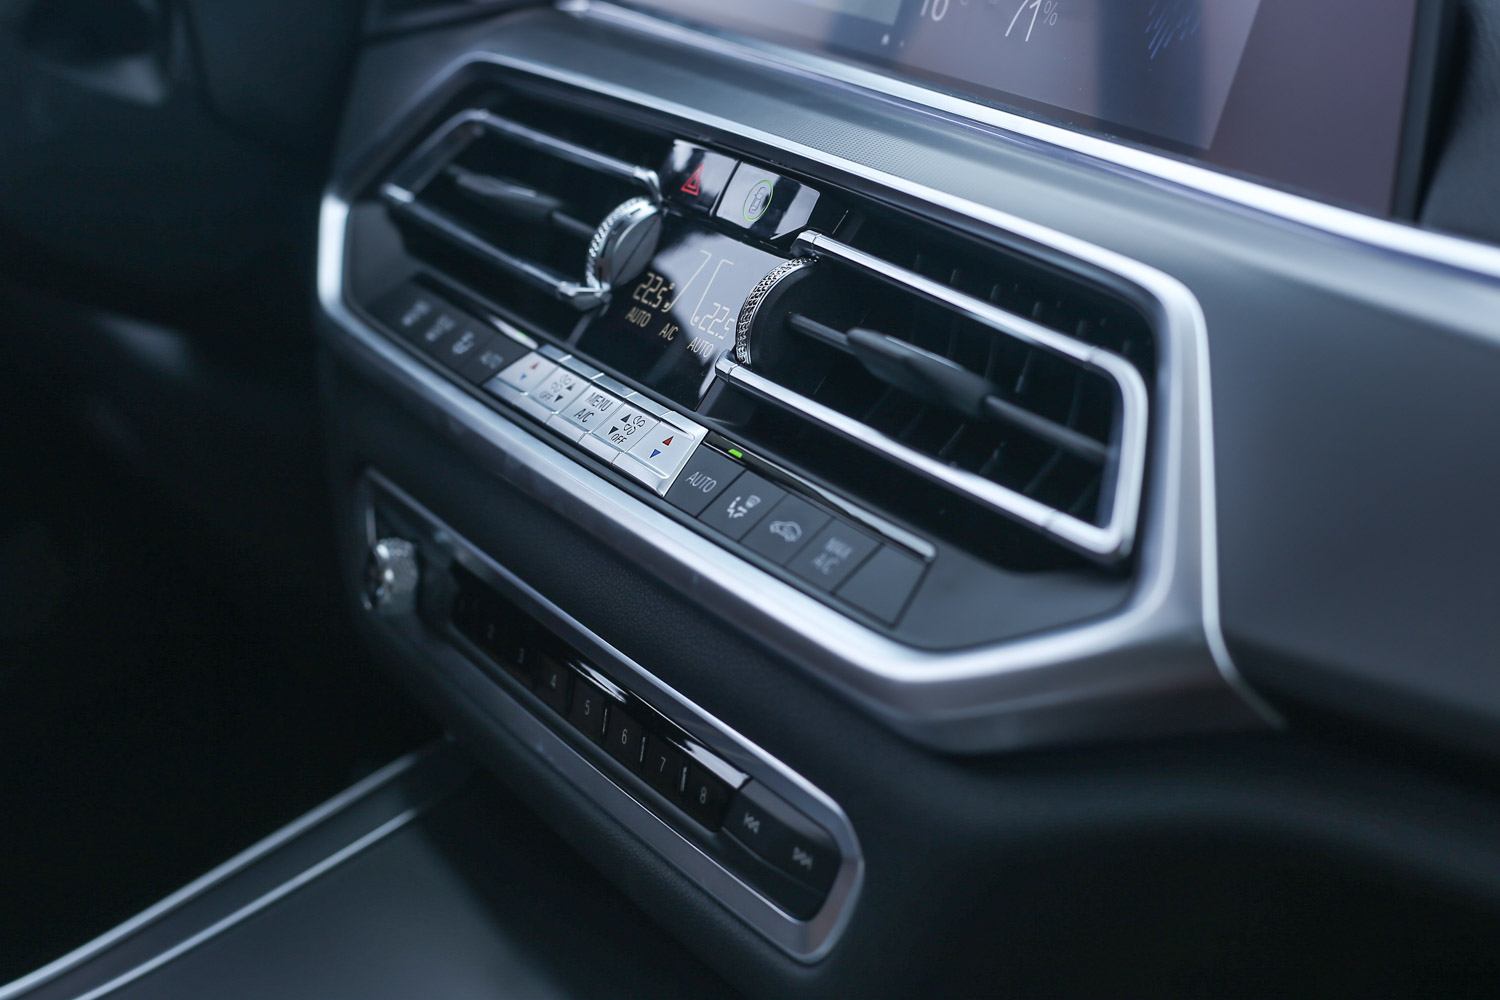 X5 xDrive25d 皆採用雙區恆溫空調，X5 xDrive40i 以上車型才是四區恆溫空調。 